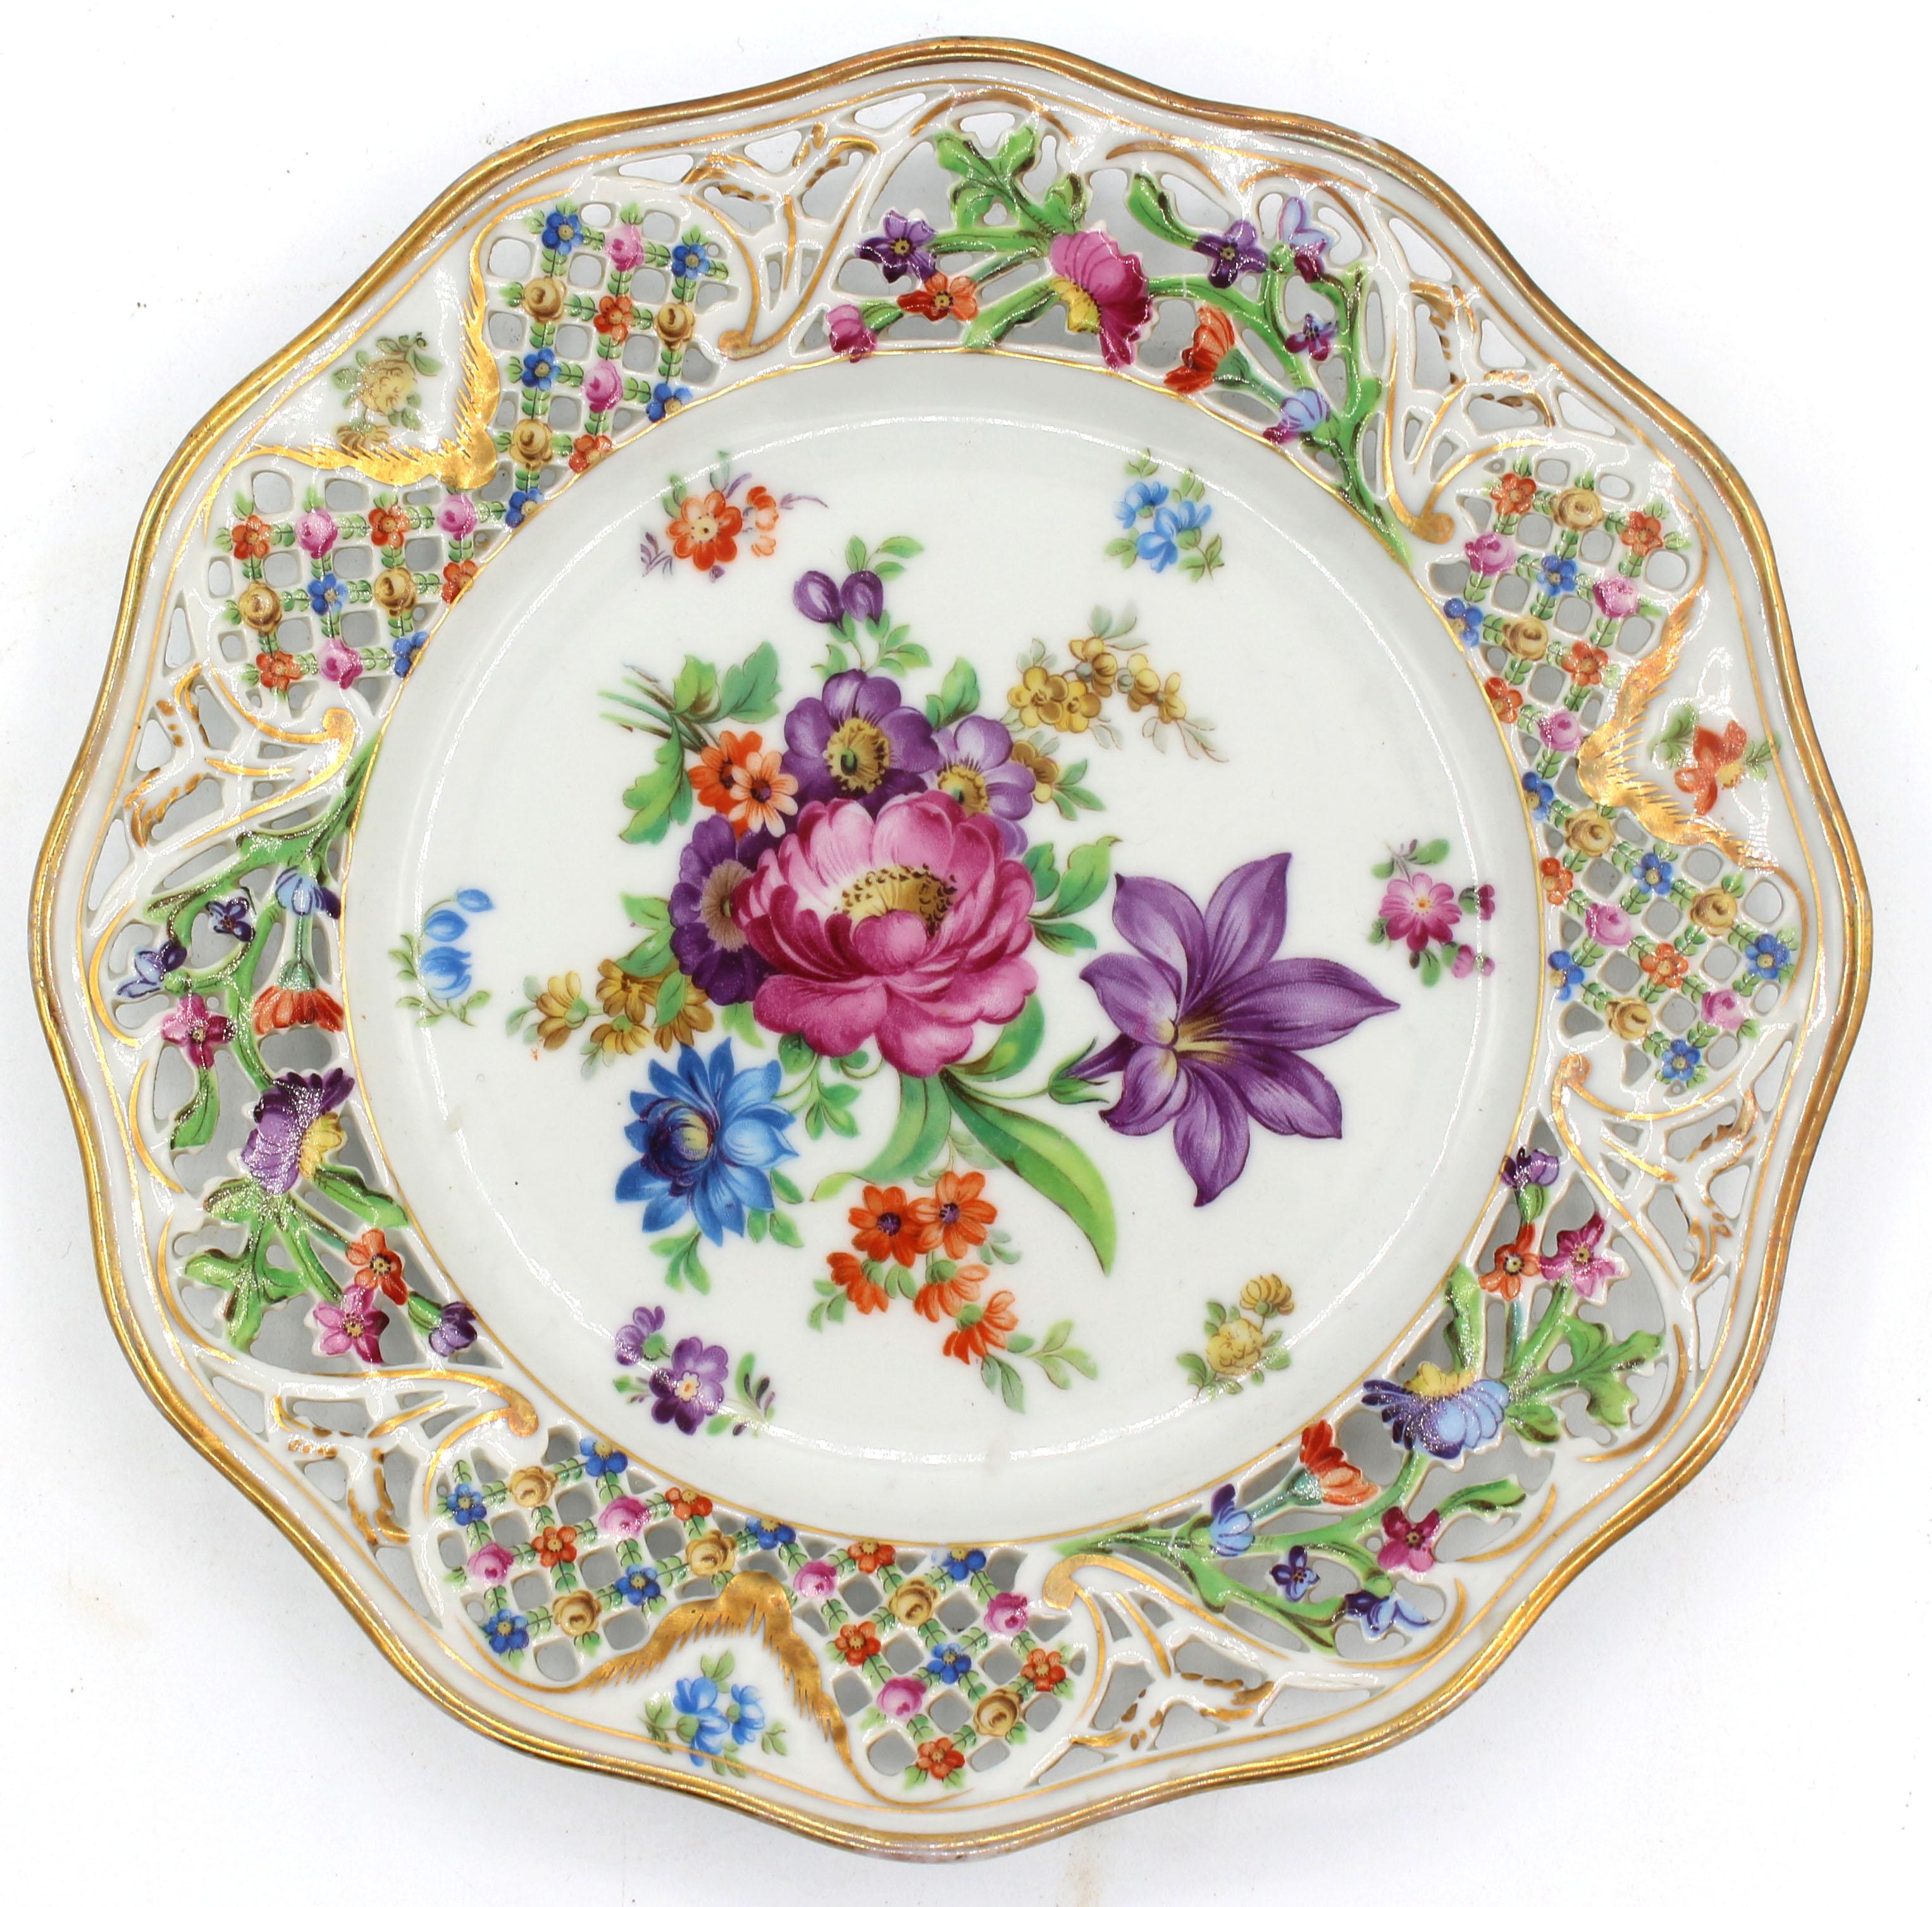 20th Century 1932-1944 Set of 8 Dessert Plates by Schumann, Dresden & Bavaria periods For Sale